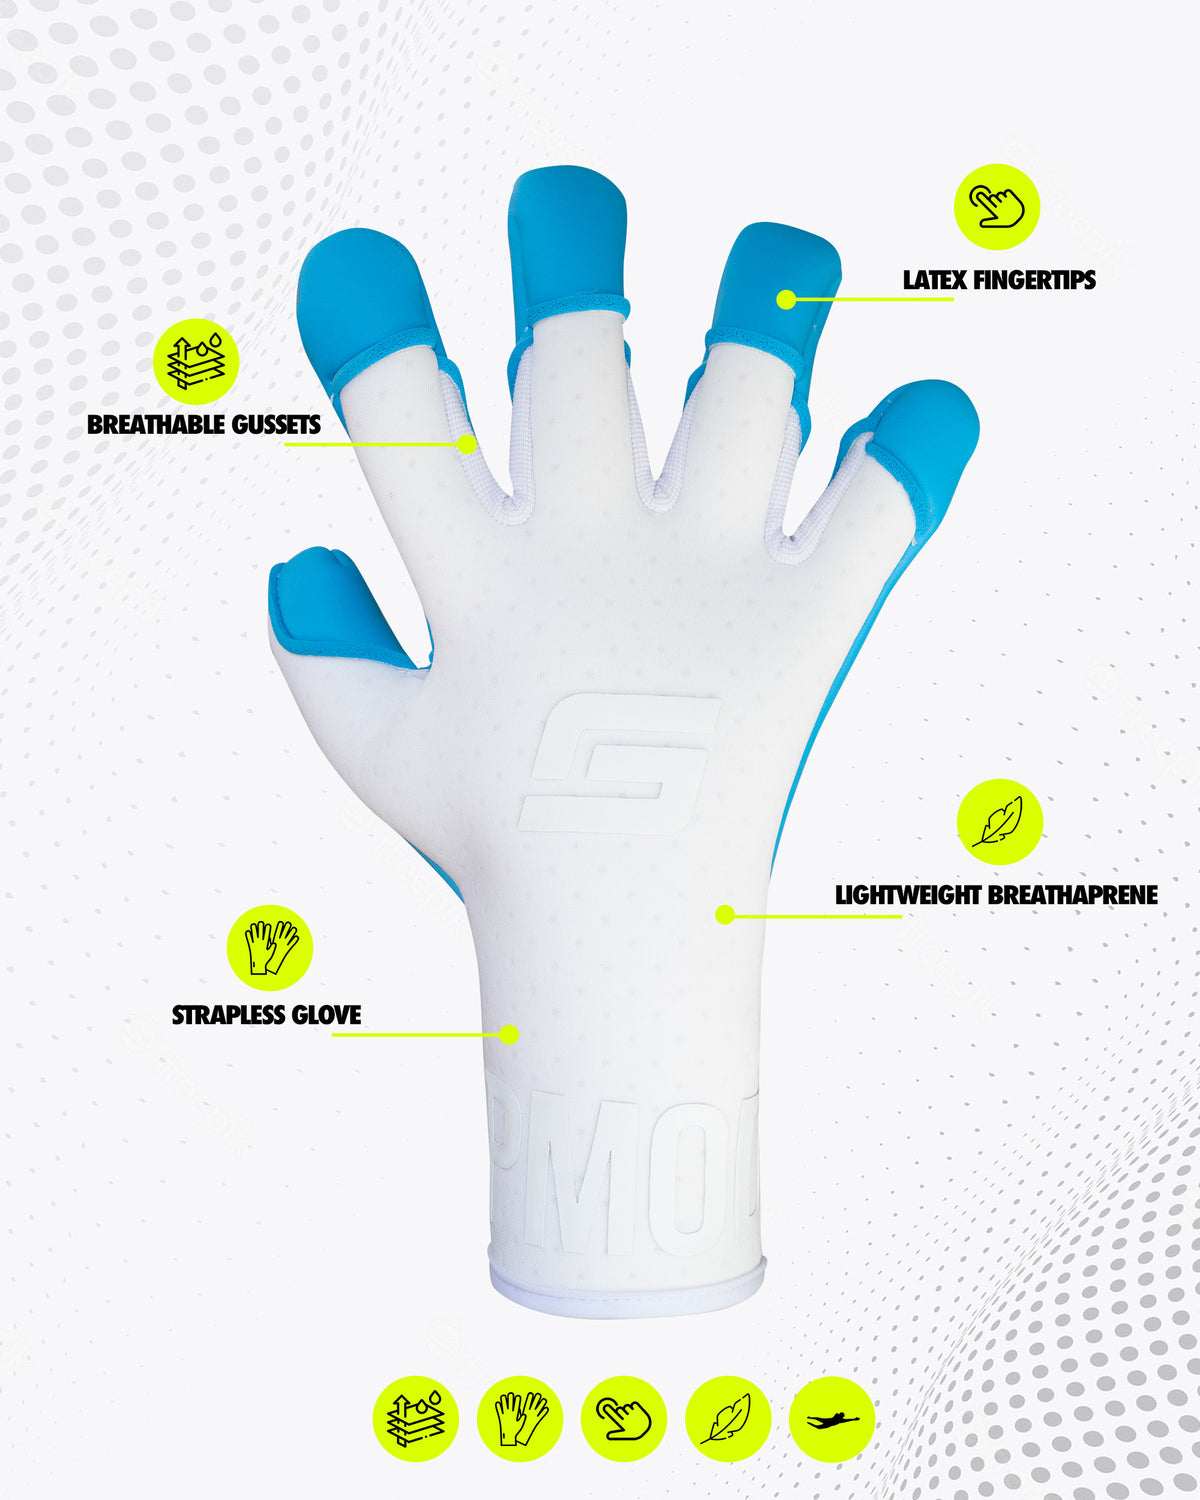 Goalkeeper gloves 4mm grip Air Fly fingertip